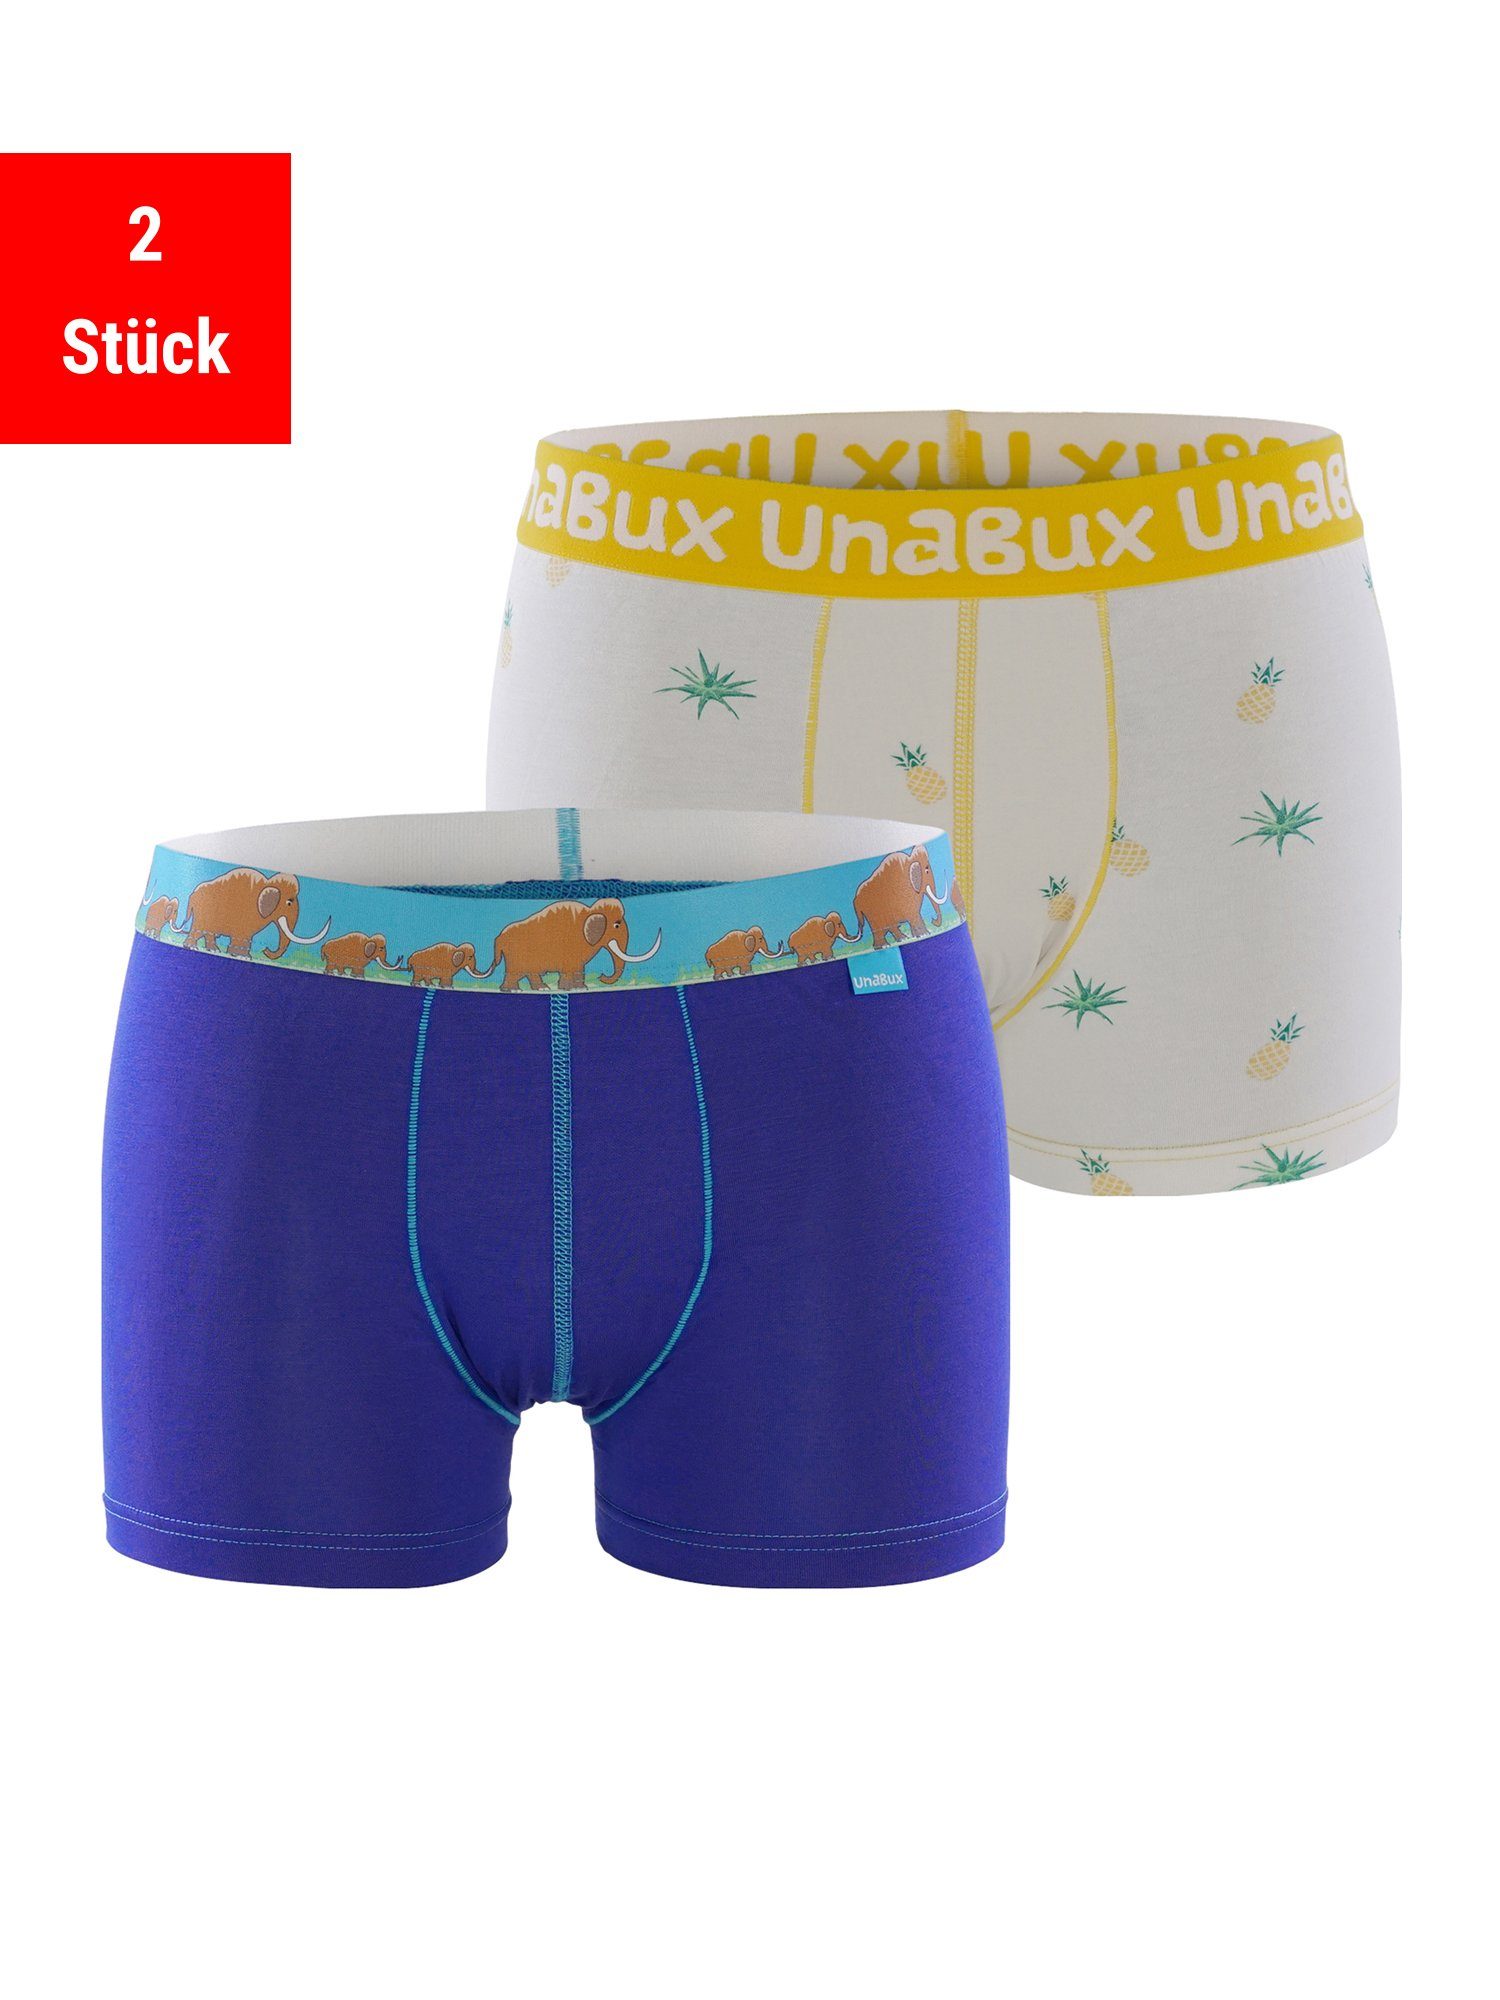 UnaBux Retro COSTA Briefs / HIKE (2-St) FINGERS MAMOUTH FIVE Boxer Pants